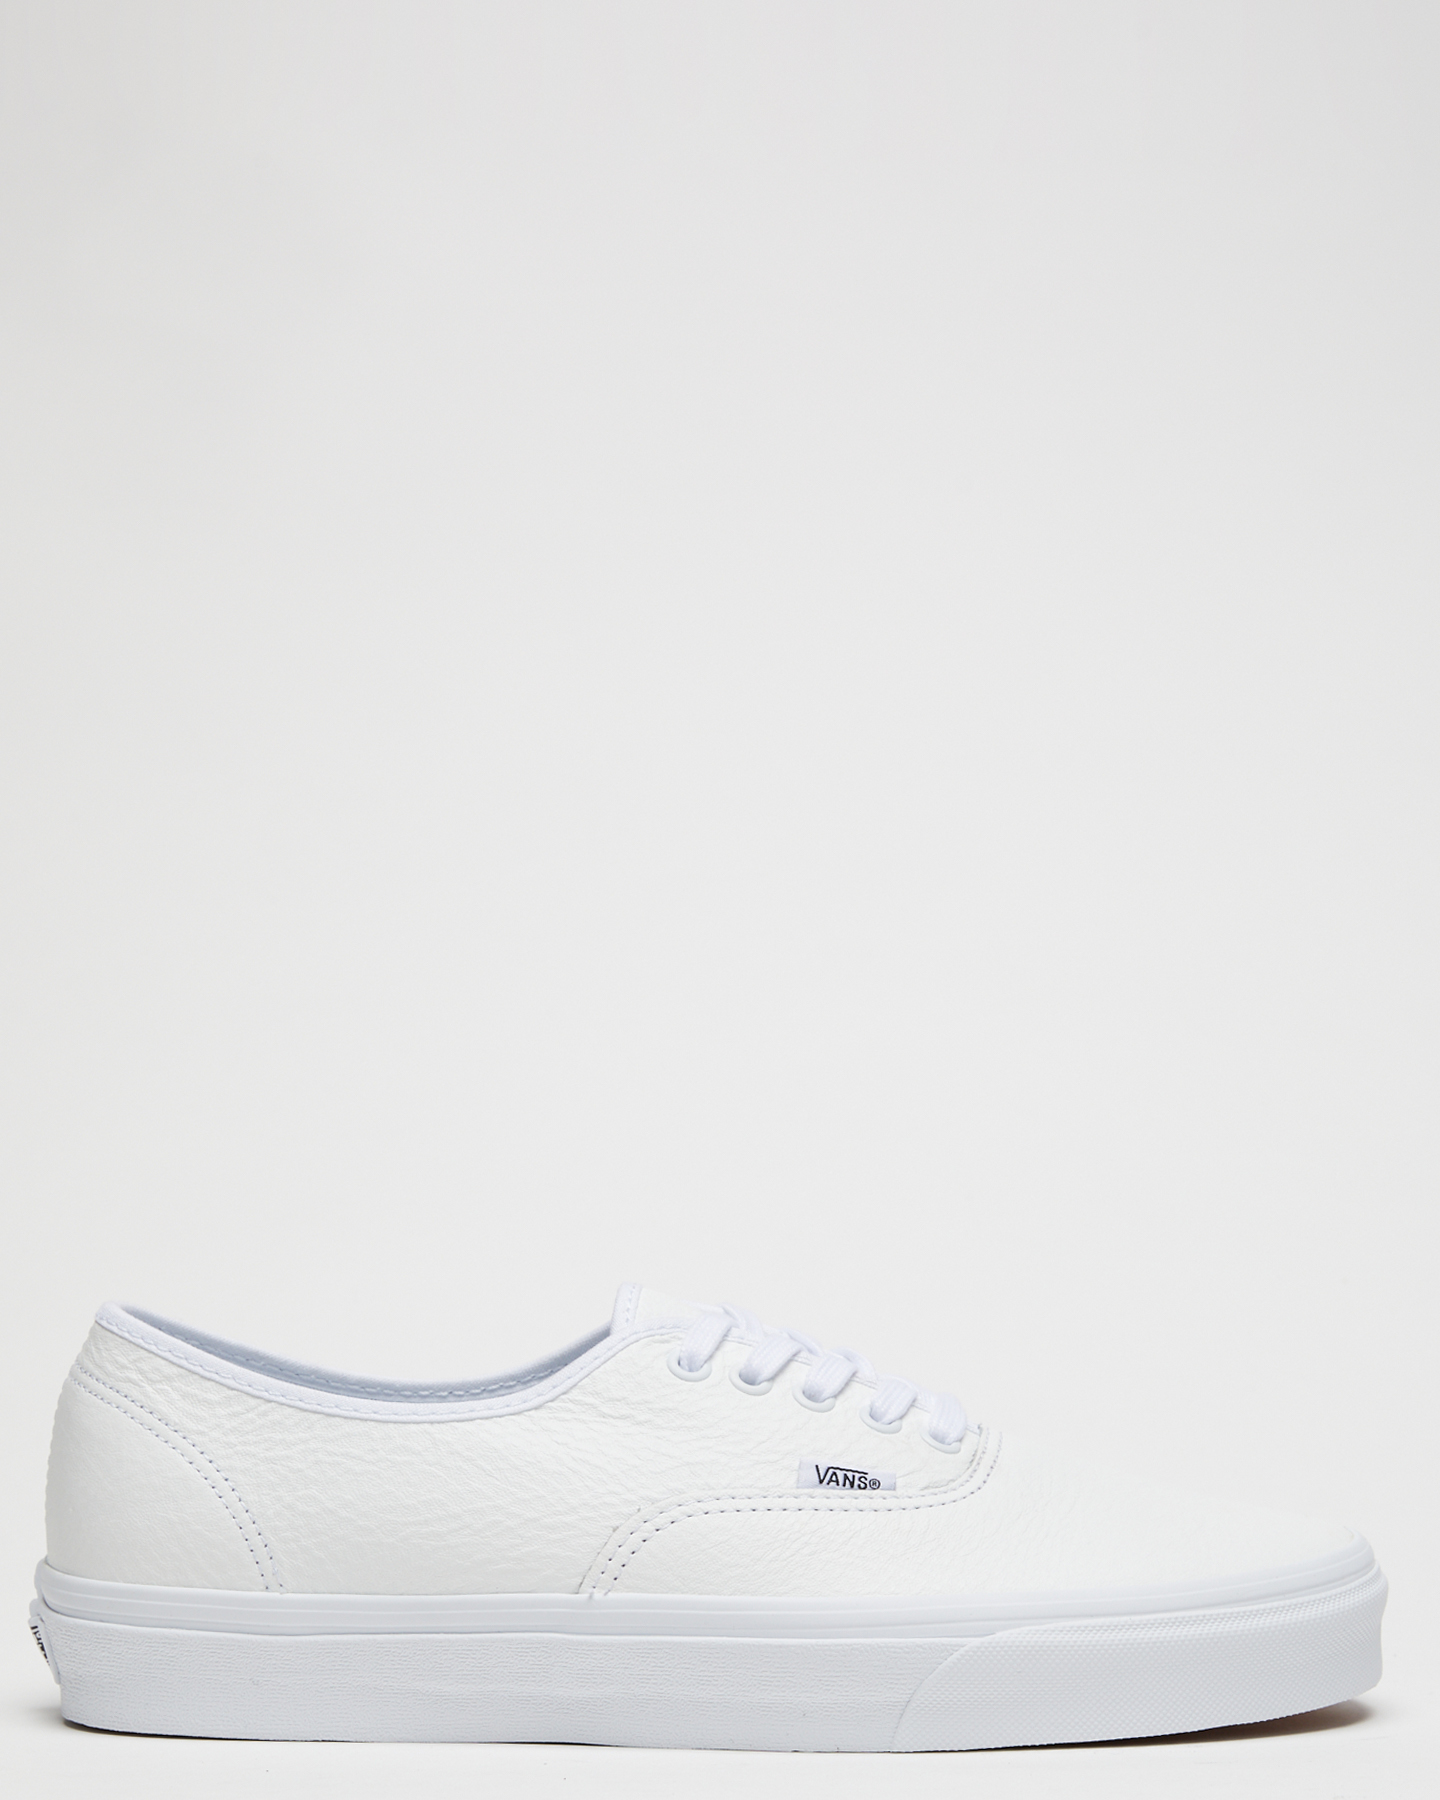 Vans Authentic Premium Leather Shoe - True White | SurfStitch